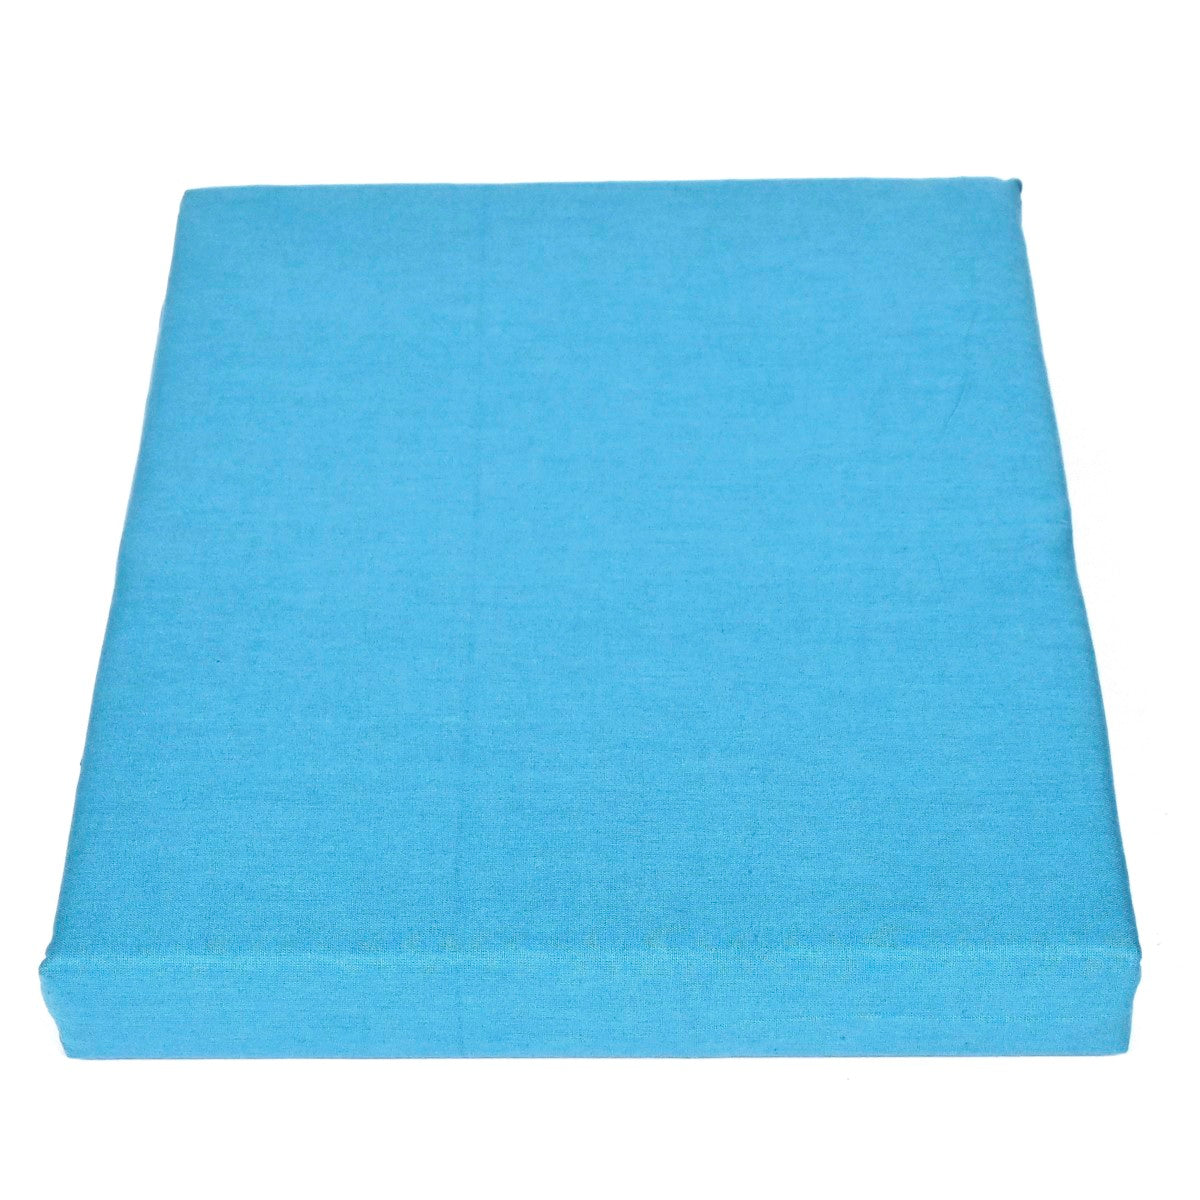 Dyed Aqua Single Bed Sheet 68x96"